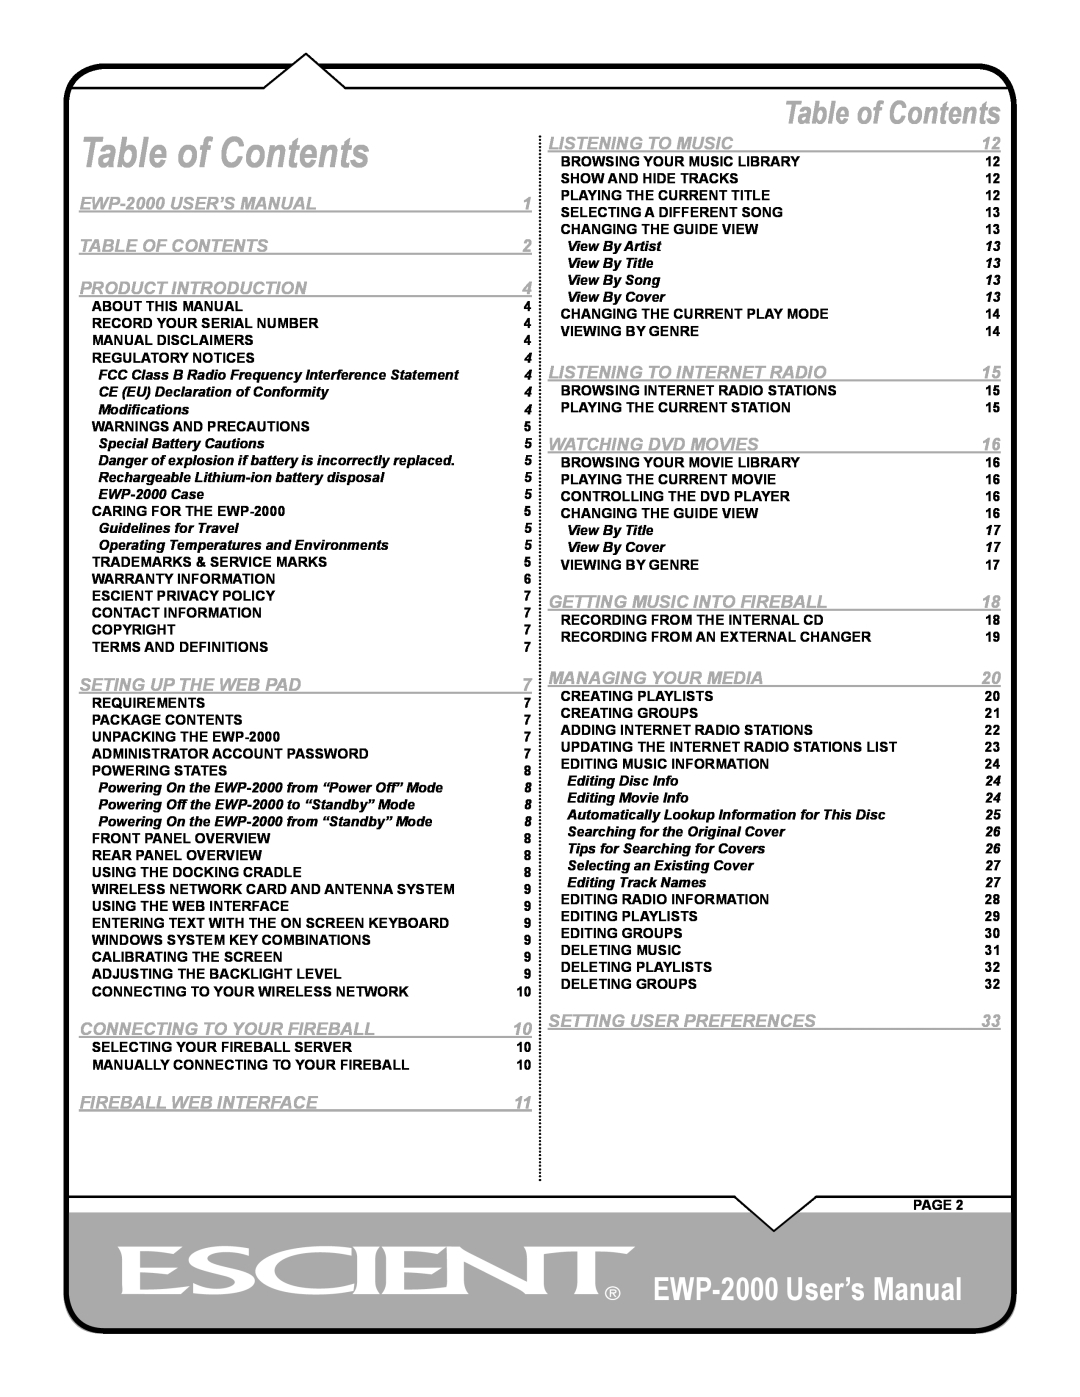 Escient user manual Table of Contents, EWP-2000 User’s Manual 